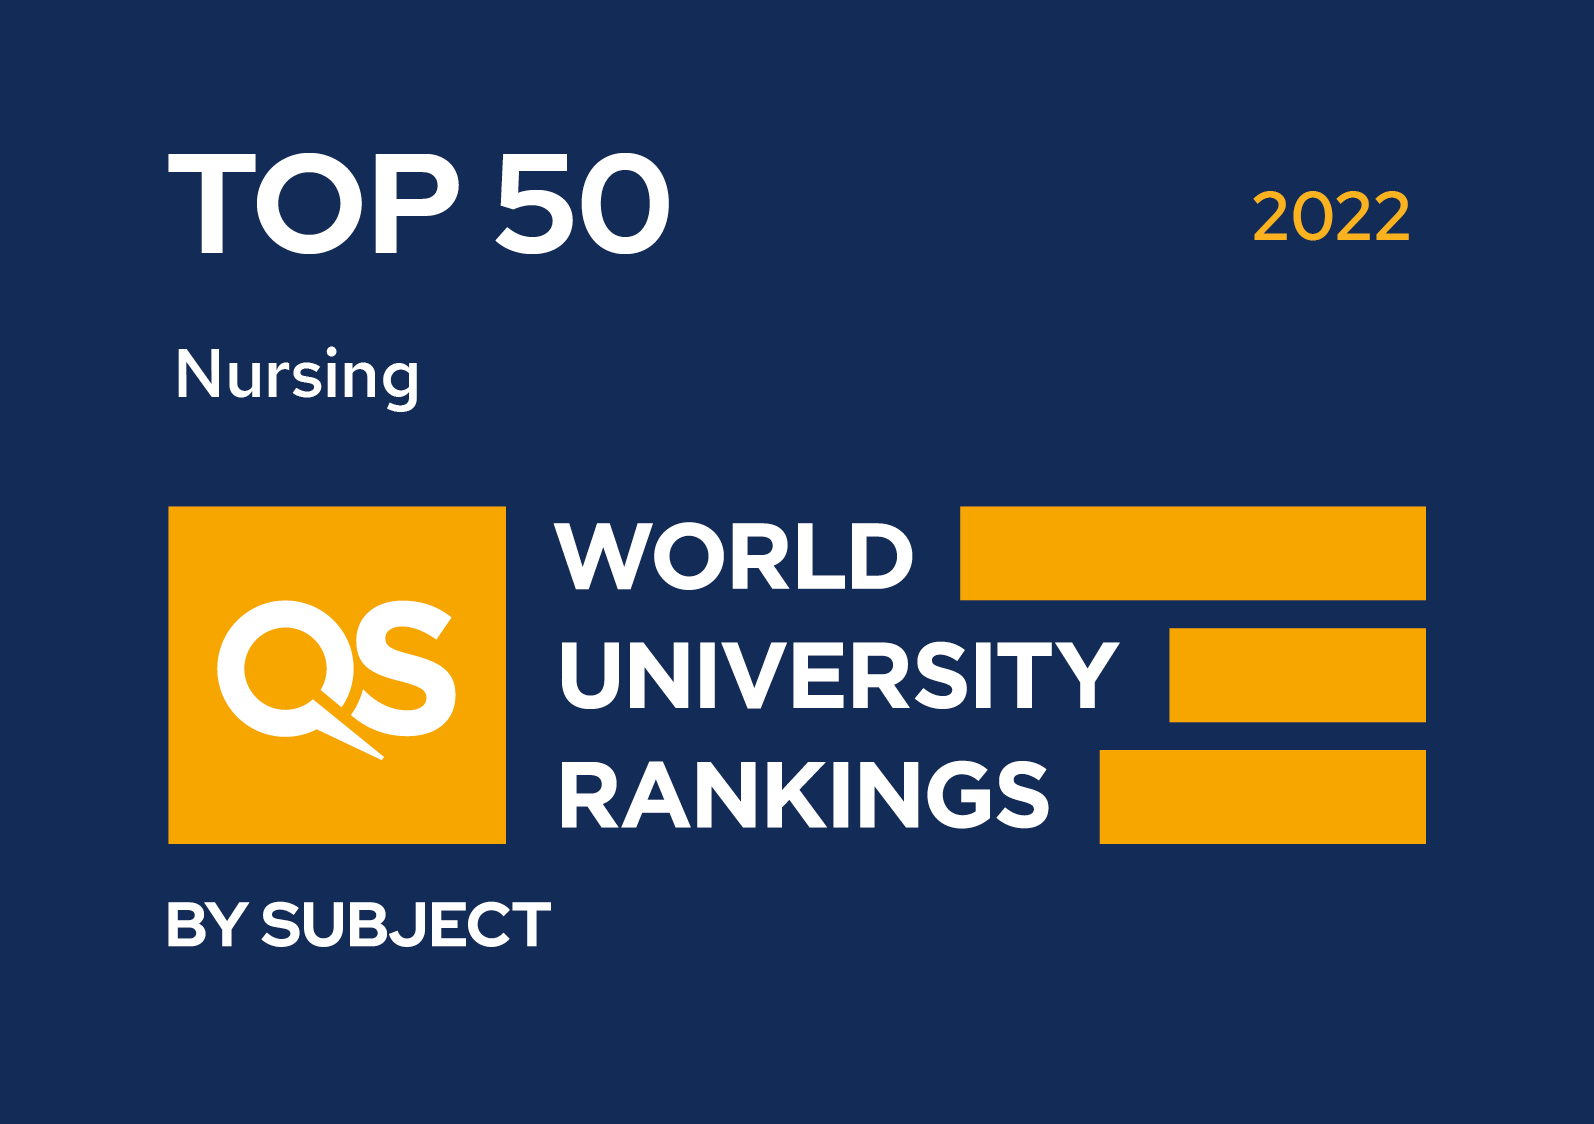 Western Sydney University has been ranked in the Top 50 Universities for Nursing